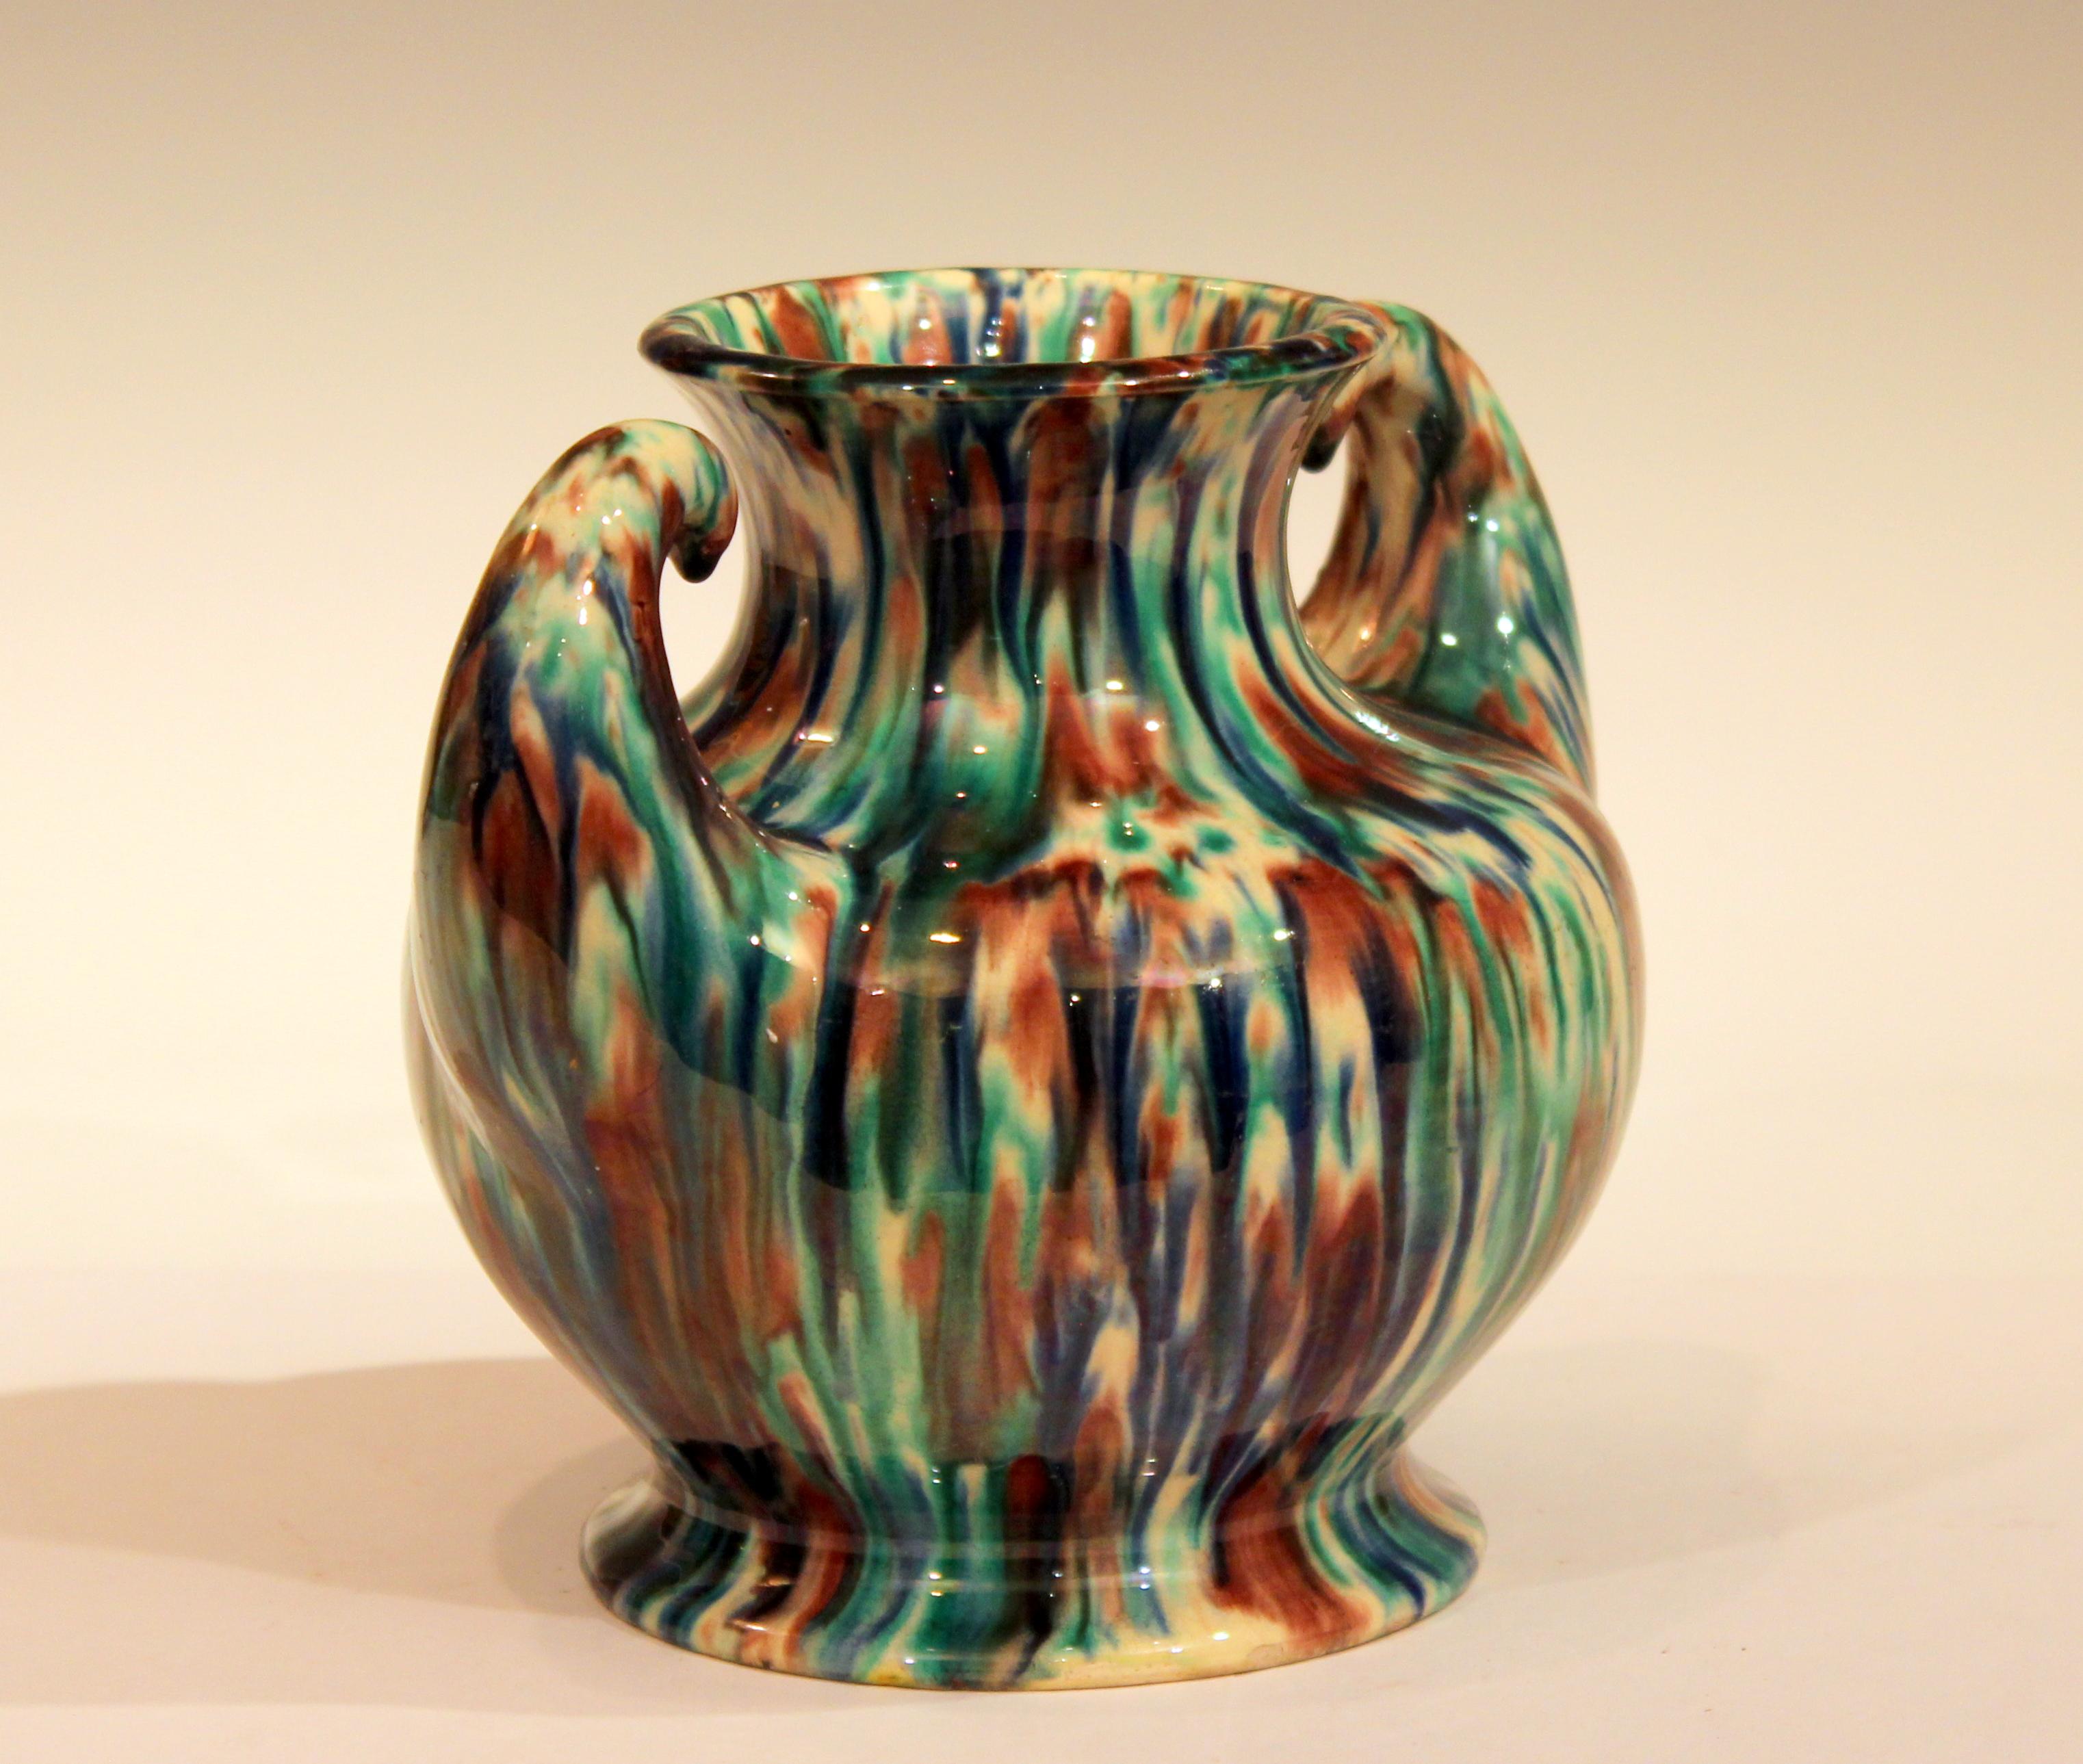 Turned Awaji Pottery Art Deco Japanese Vintage Studio Muscle Vase Flambe Glaze